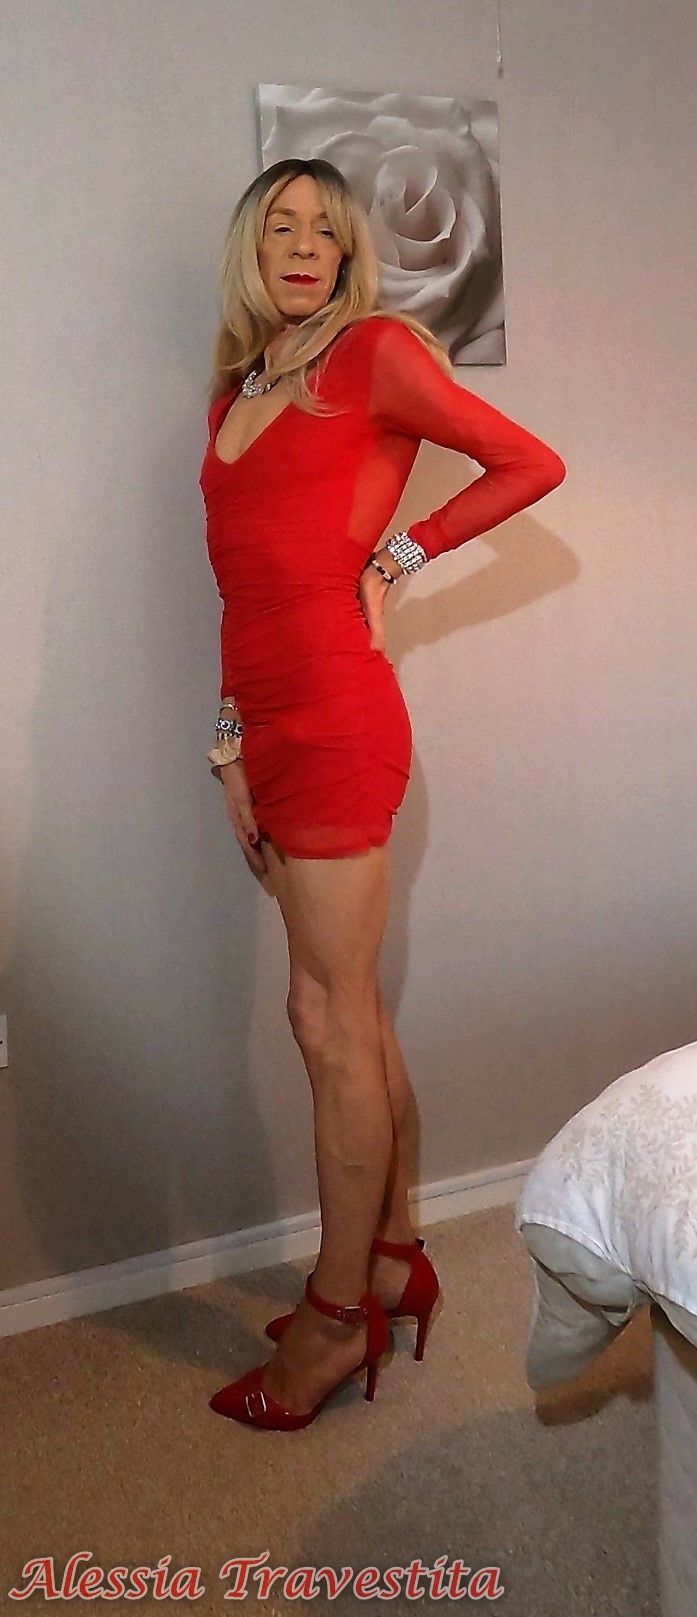 64 Alessia Travestita in Sheer Red Dress #23